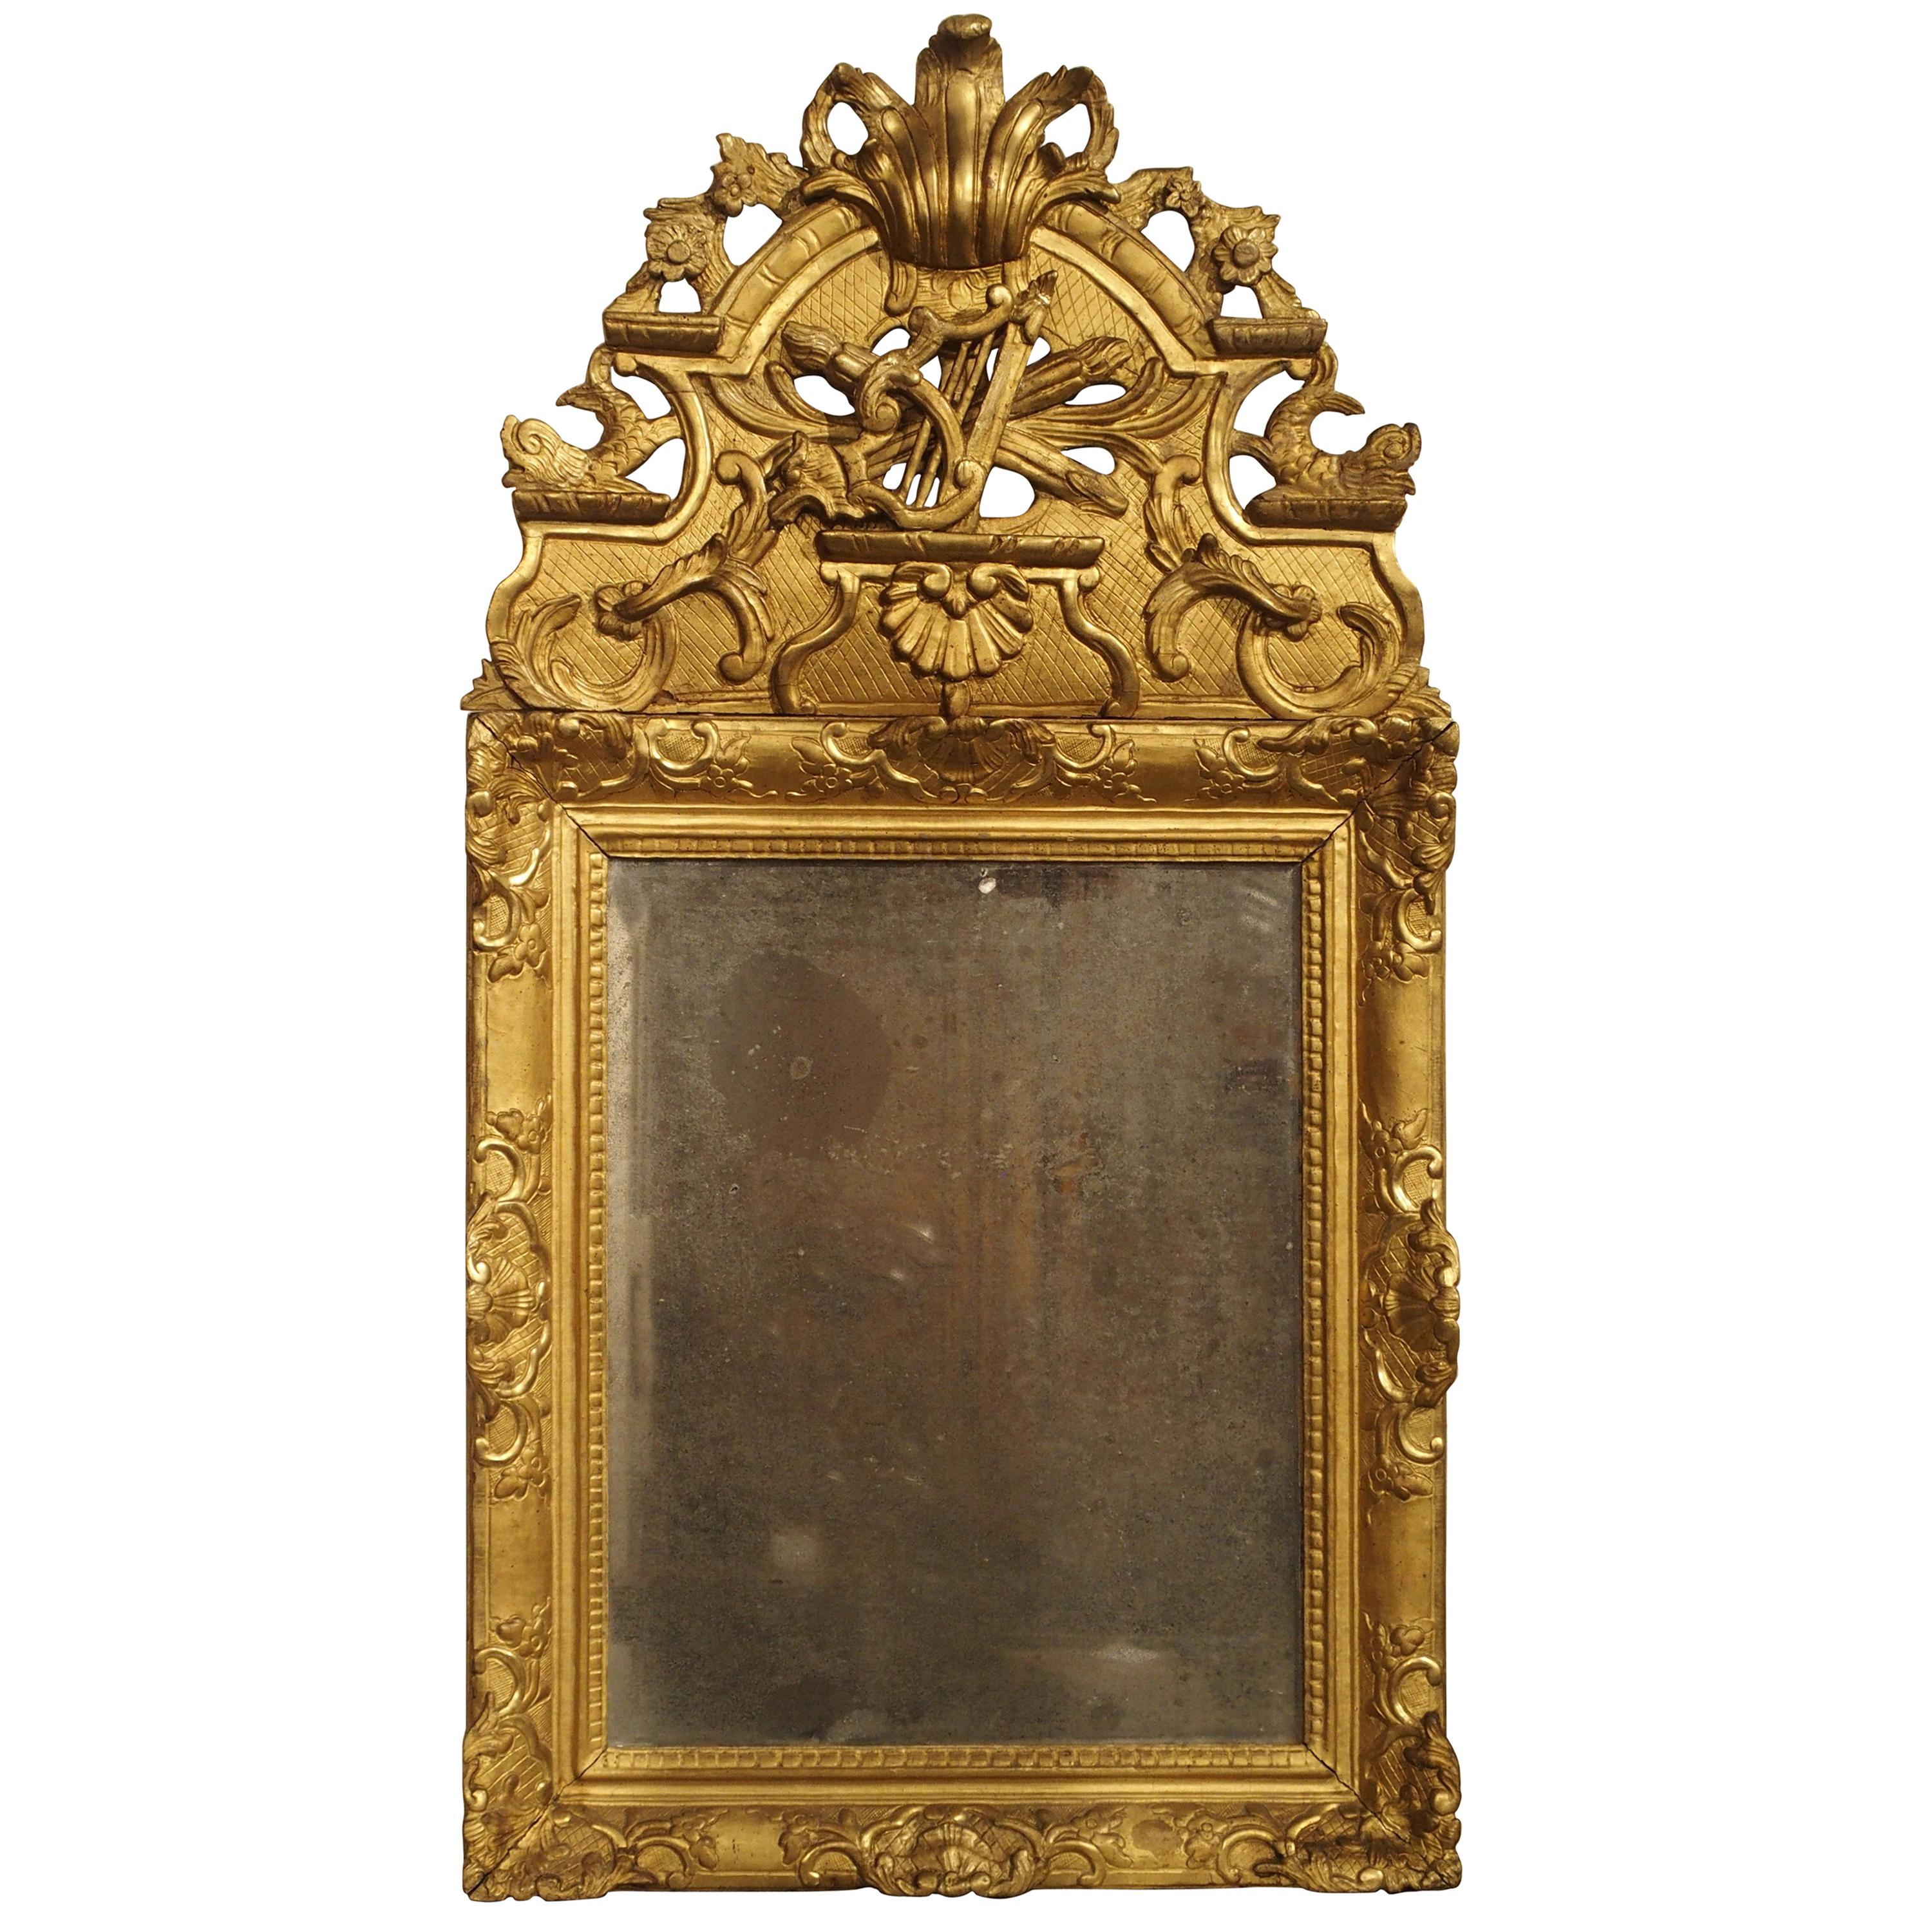 Period French Regence Giltwood Mirror, circa 1720